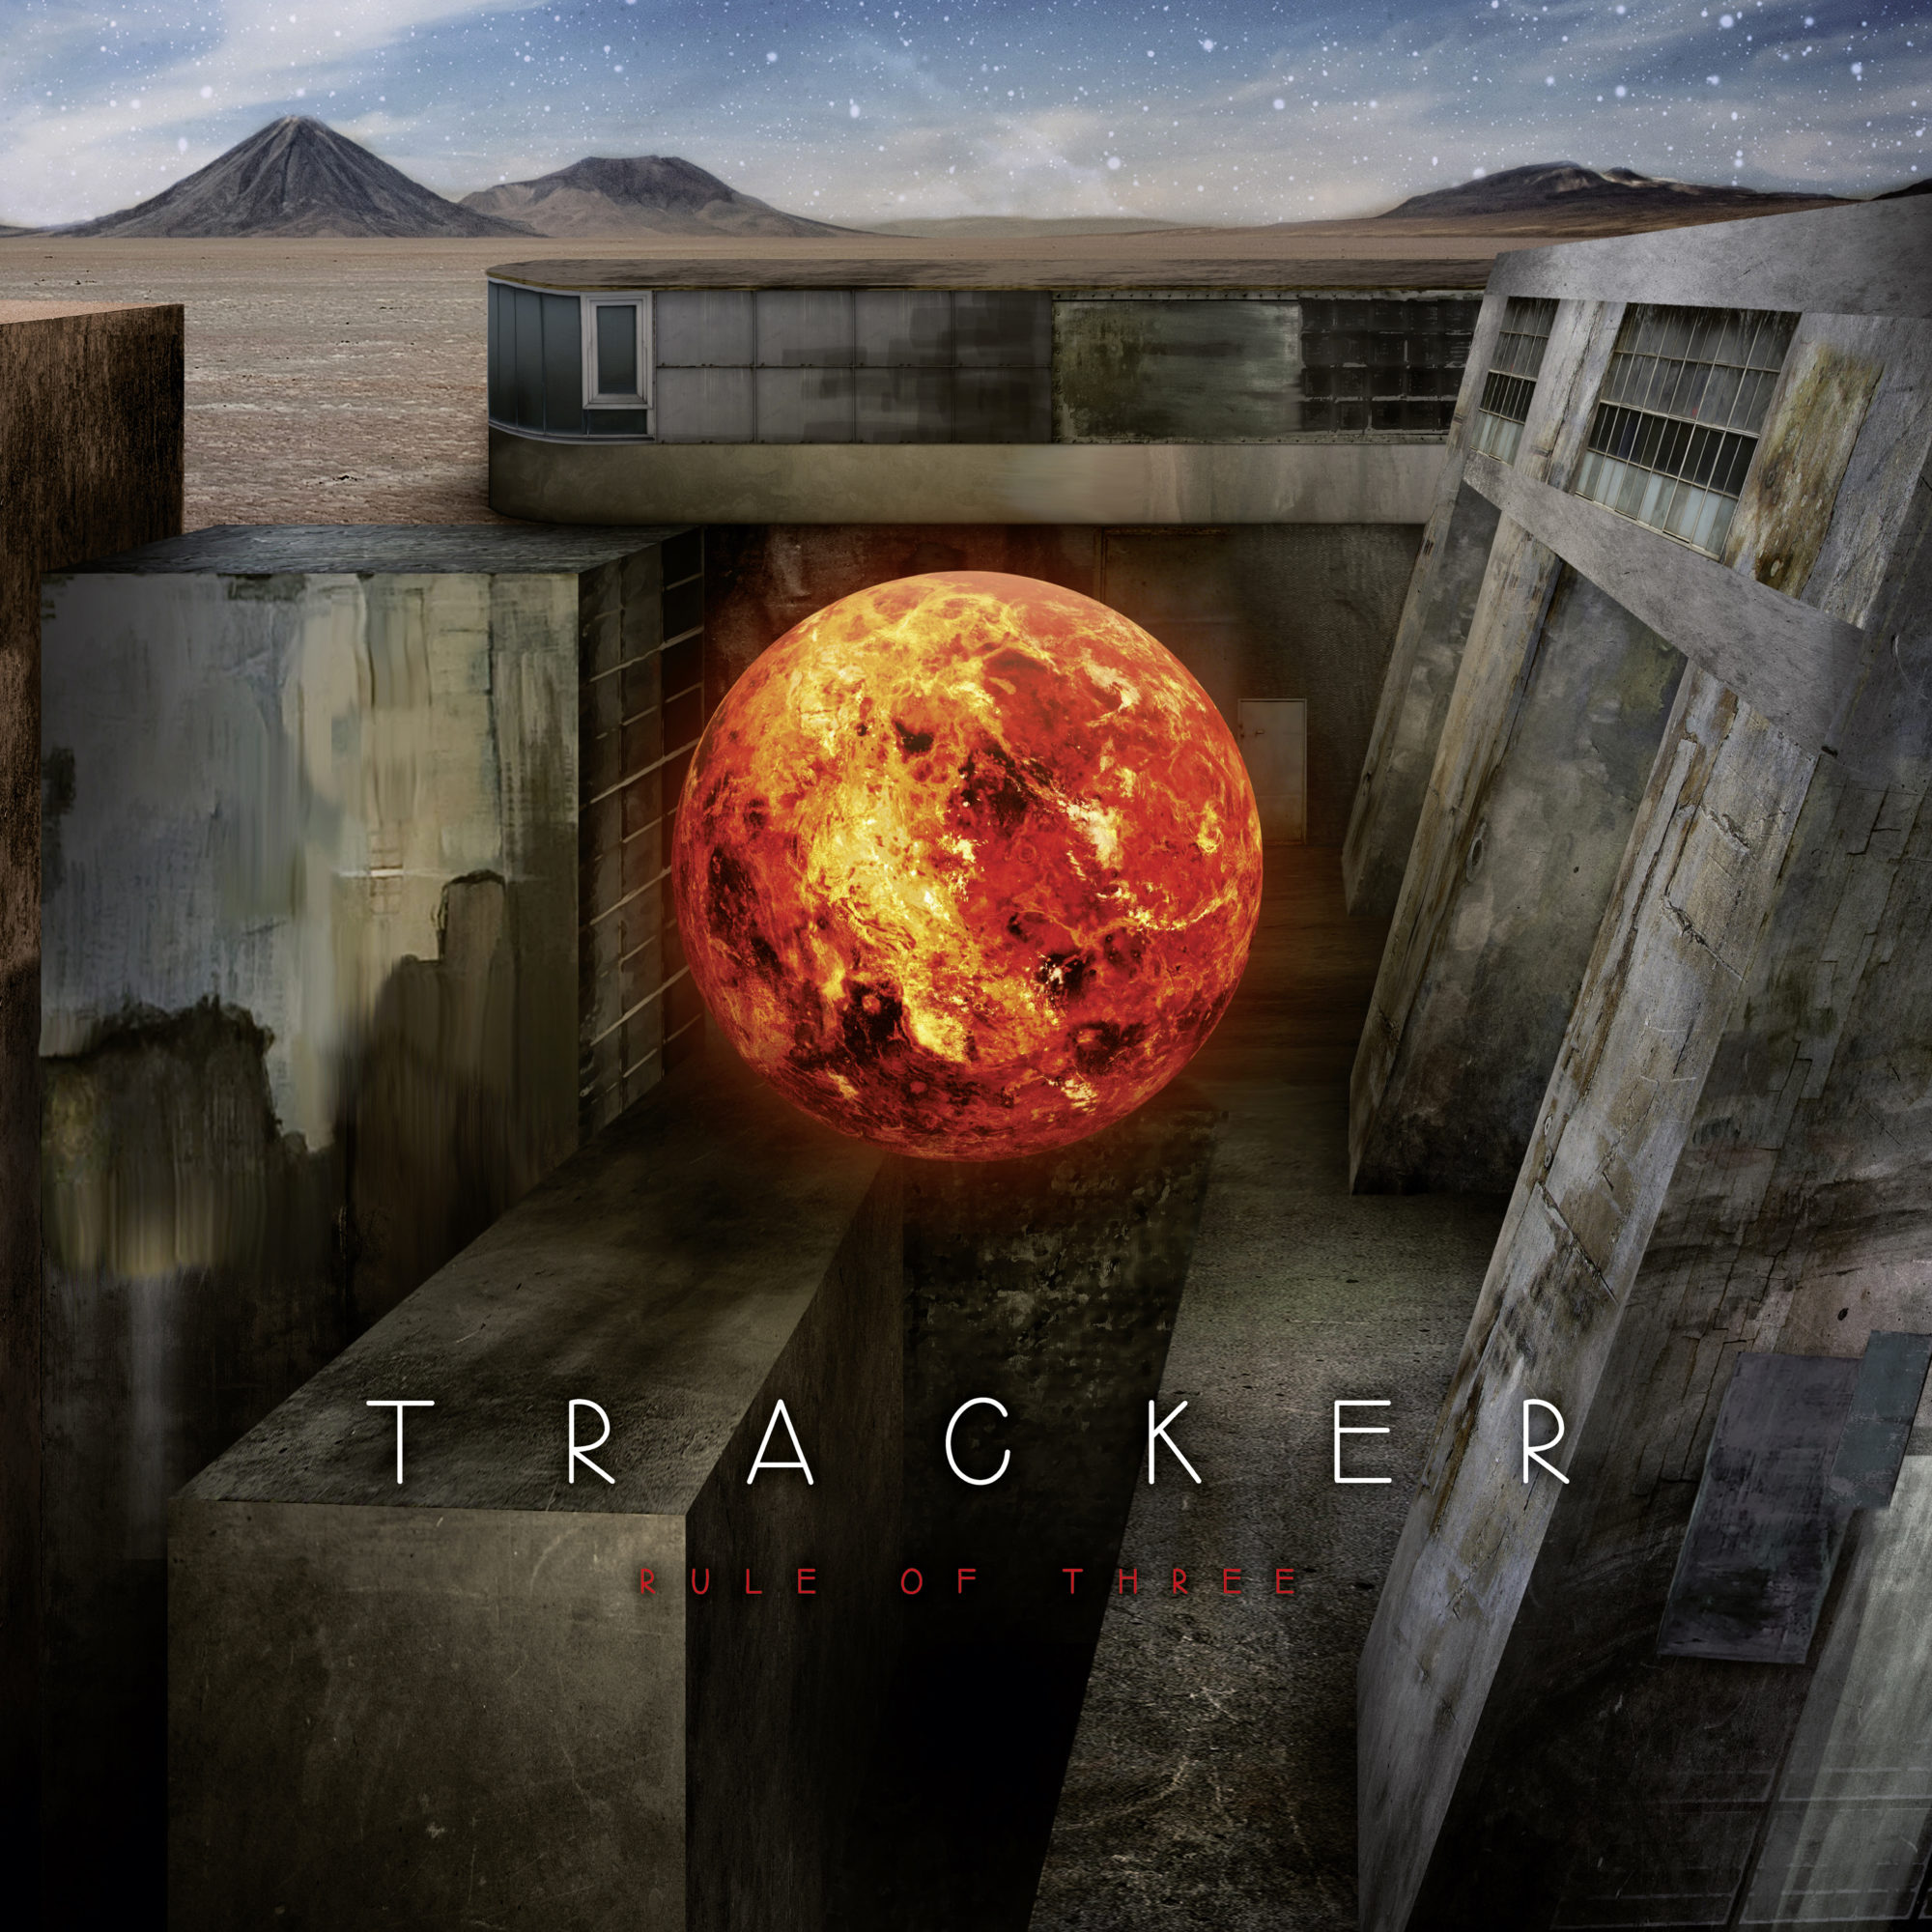 Tracker Band Music Rule of Three Album Cover Artwork Austria